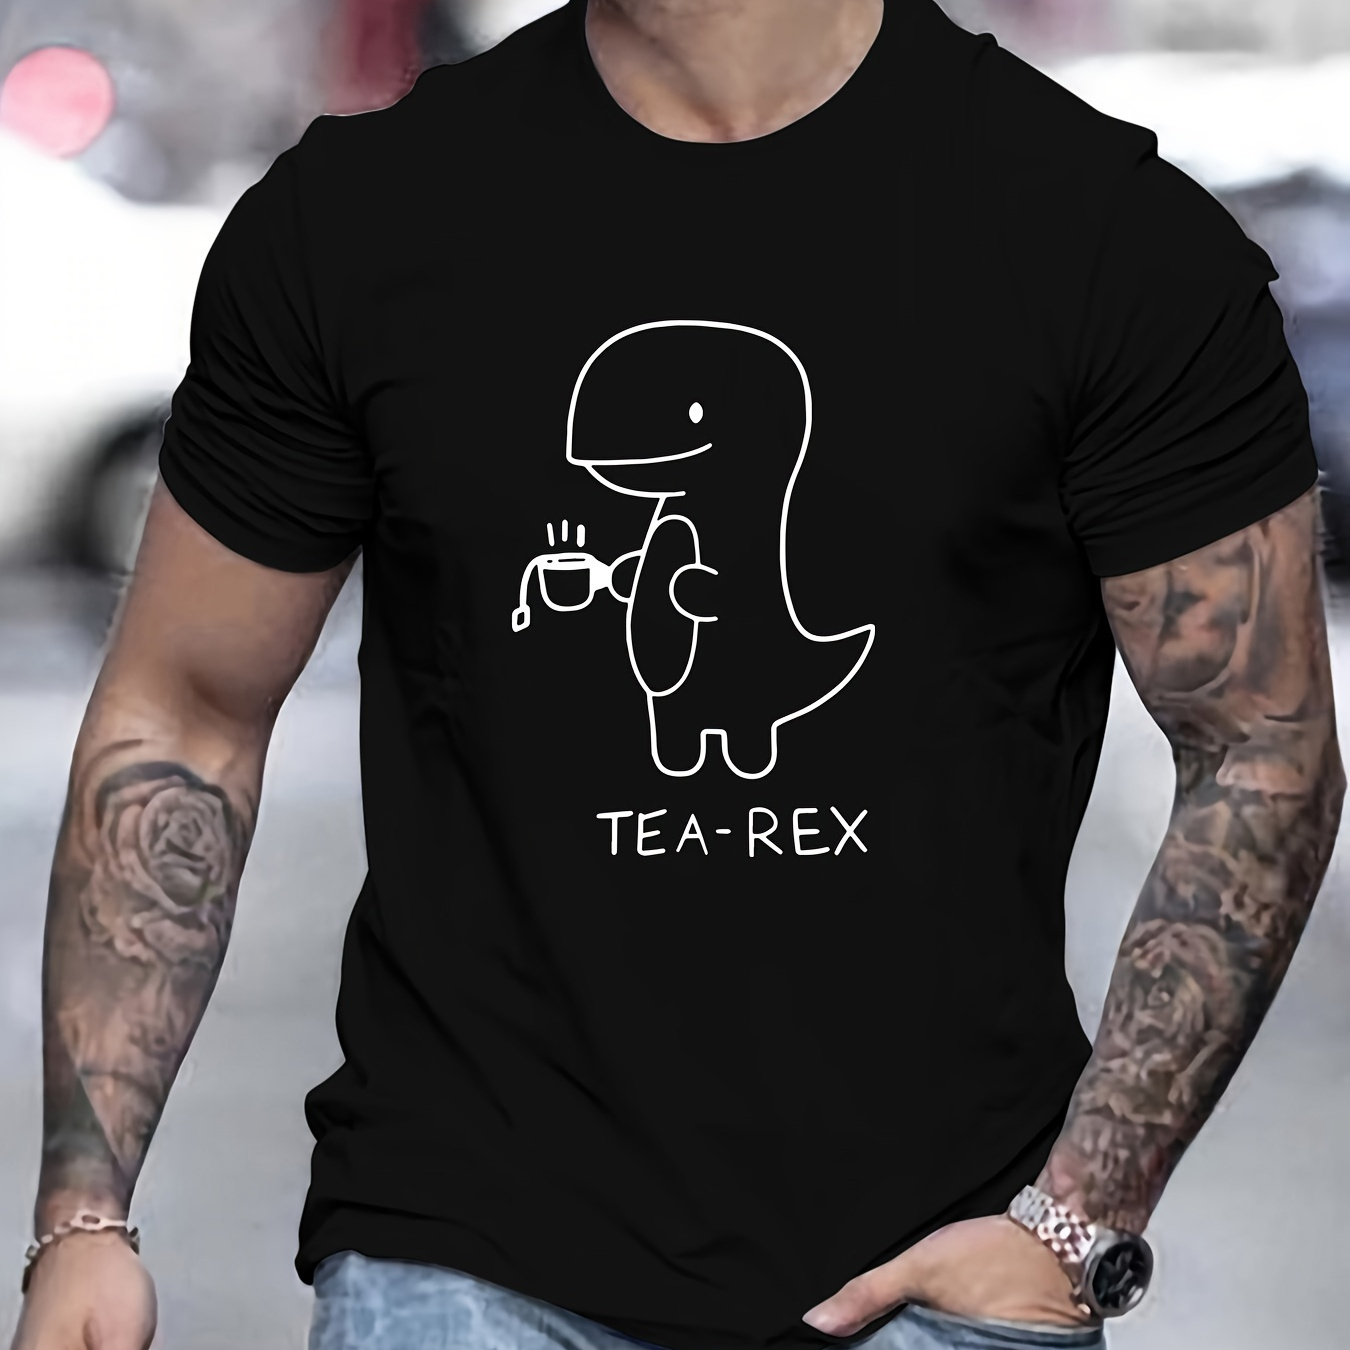 

Men's Dinosaur Print T-shirt, Casual Short Sleeve Crew Neck Tee, Men's Clothing For Outdoor